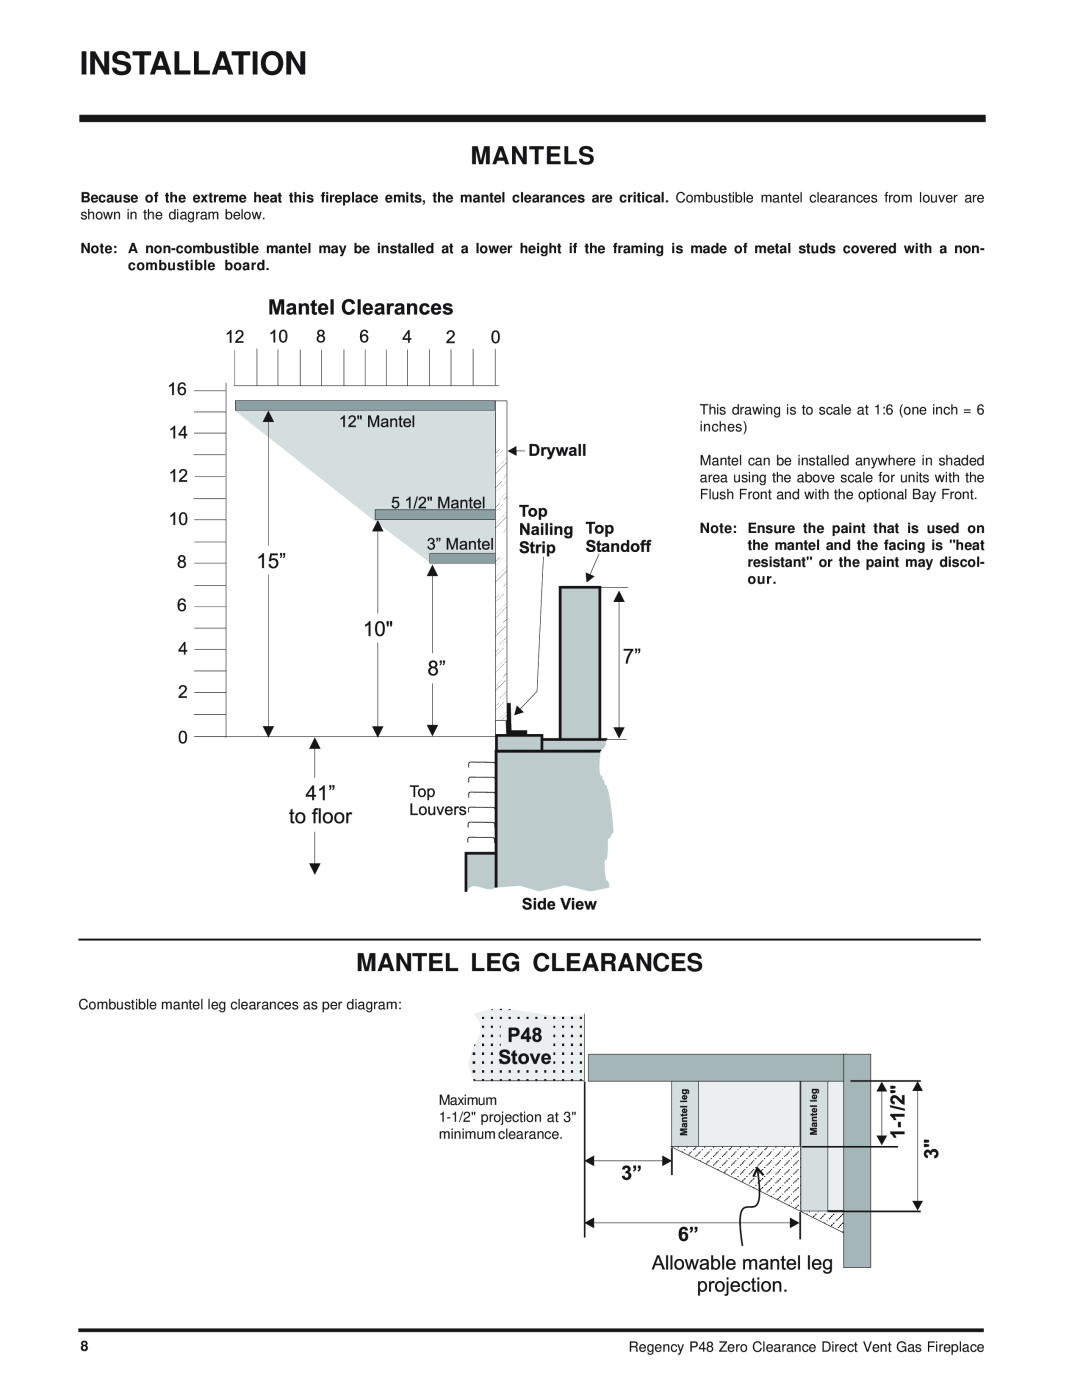 Regency P48-NG, P48-LP installation manual Mantels, Mantel Leg Clearances 